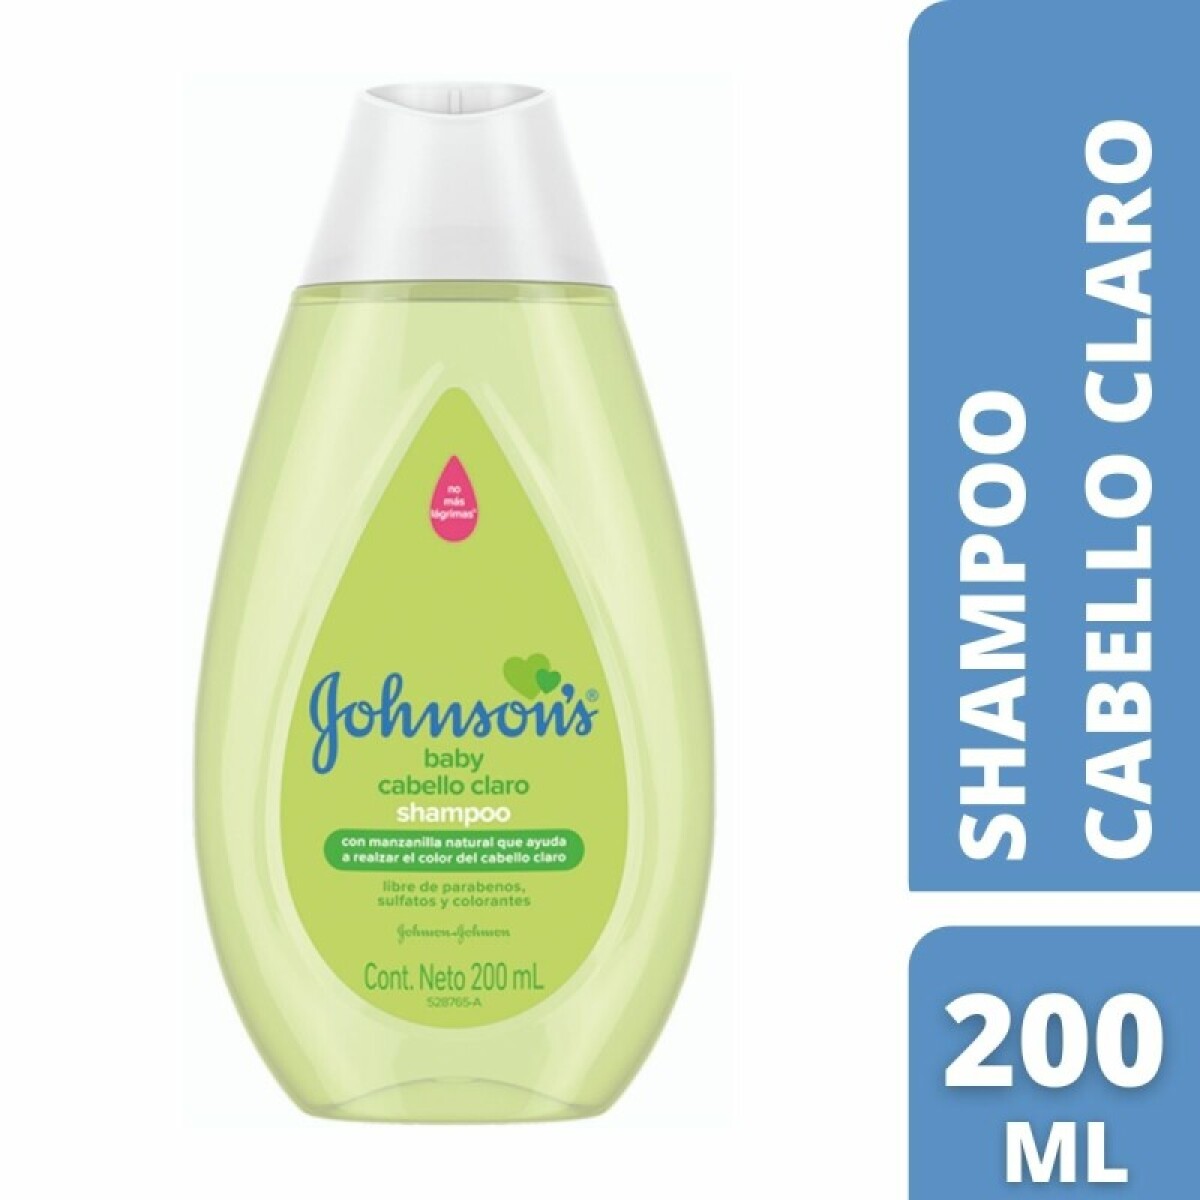 Shampoo cabello claro 200ml Johnsons 